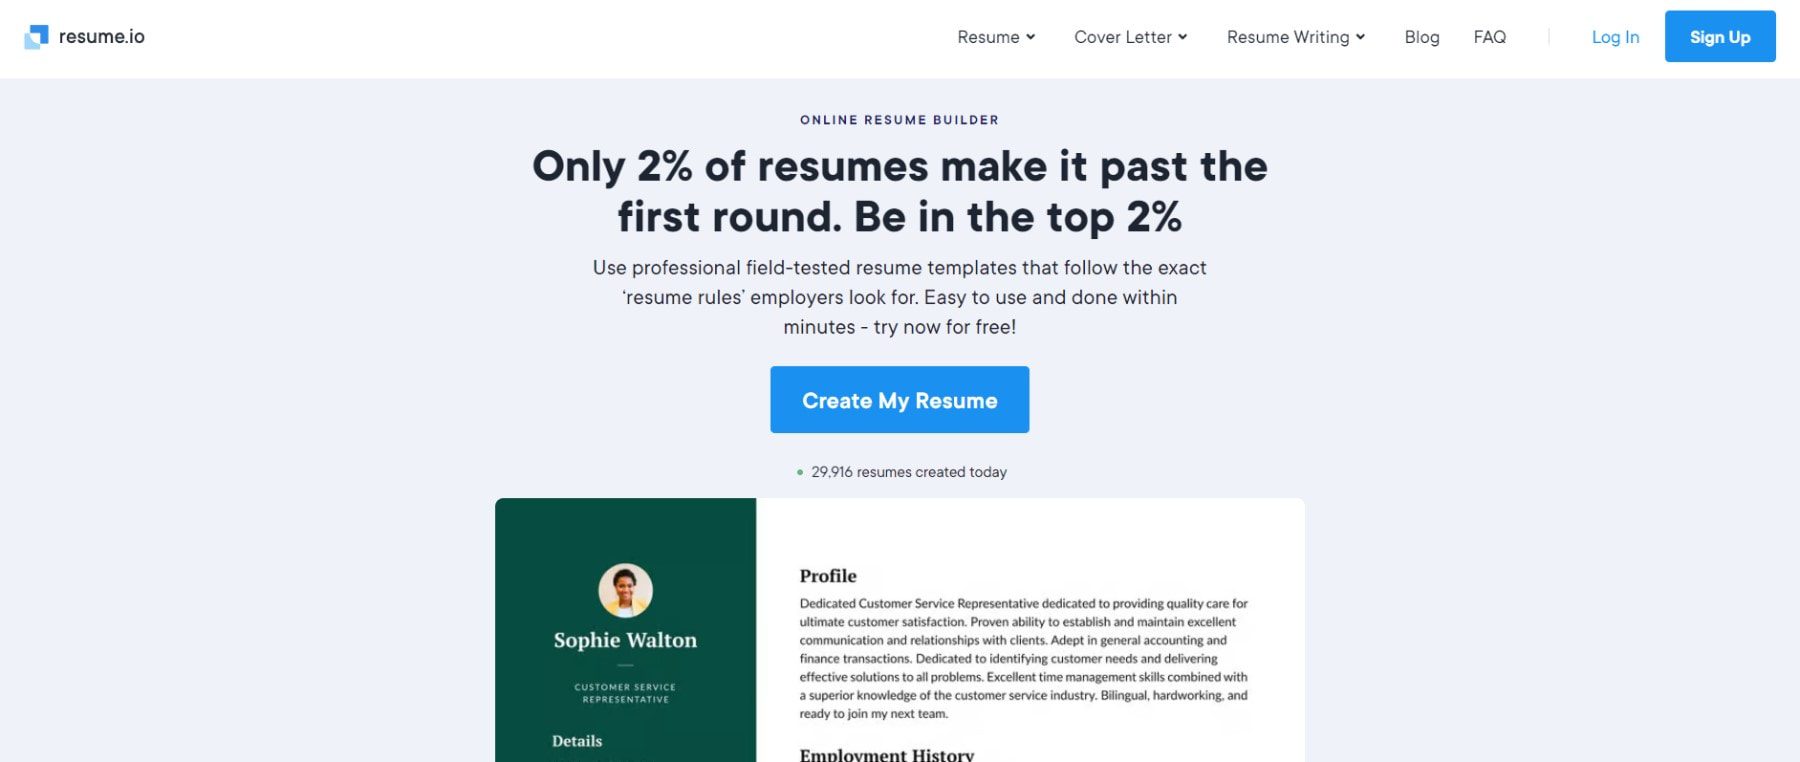 Resume.io - Homepage May 2023